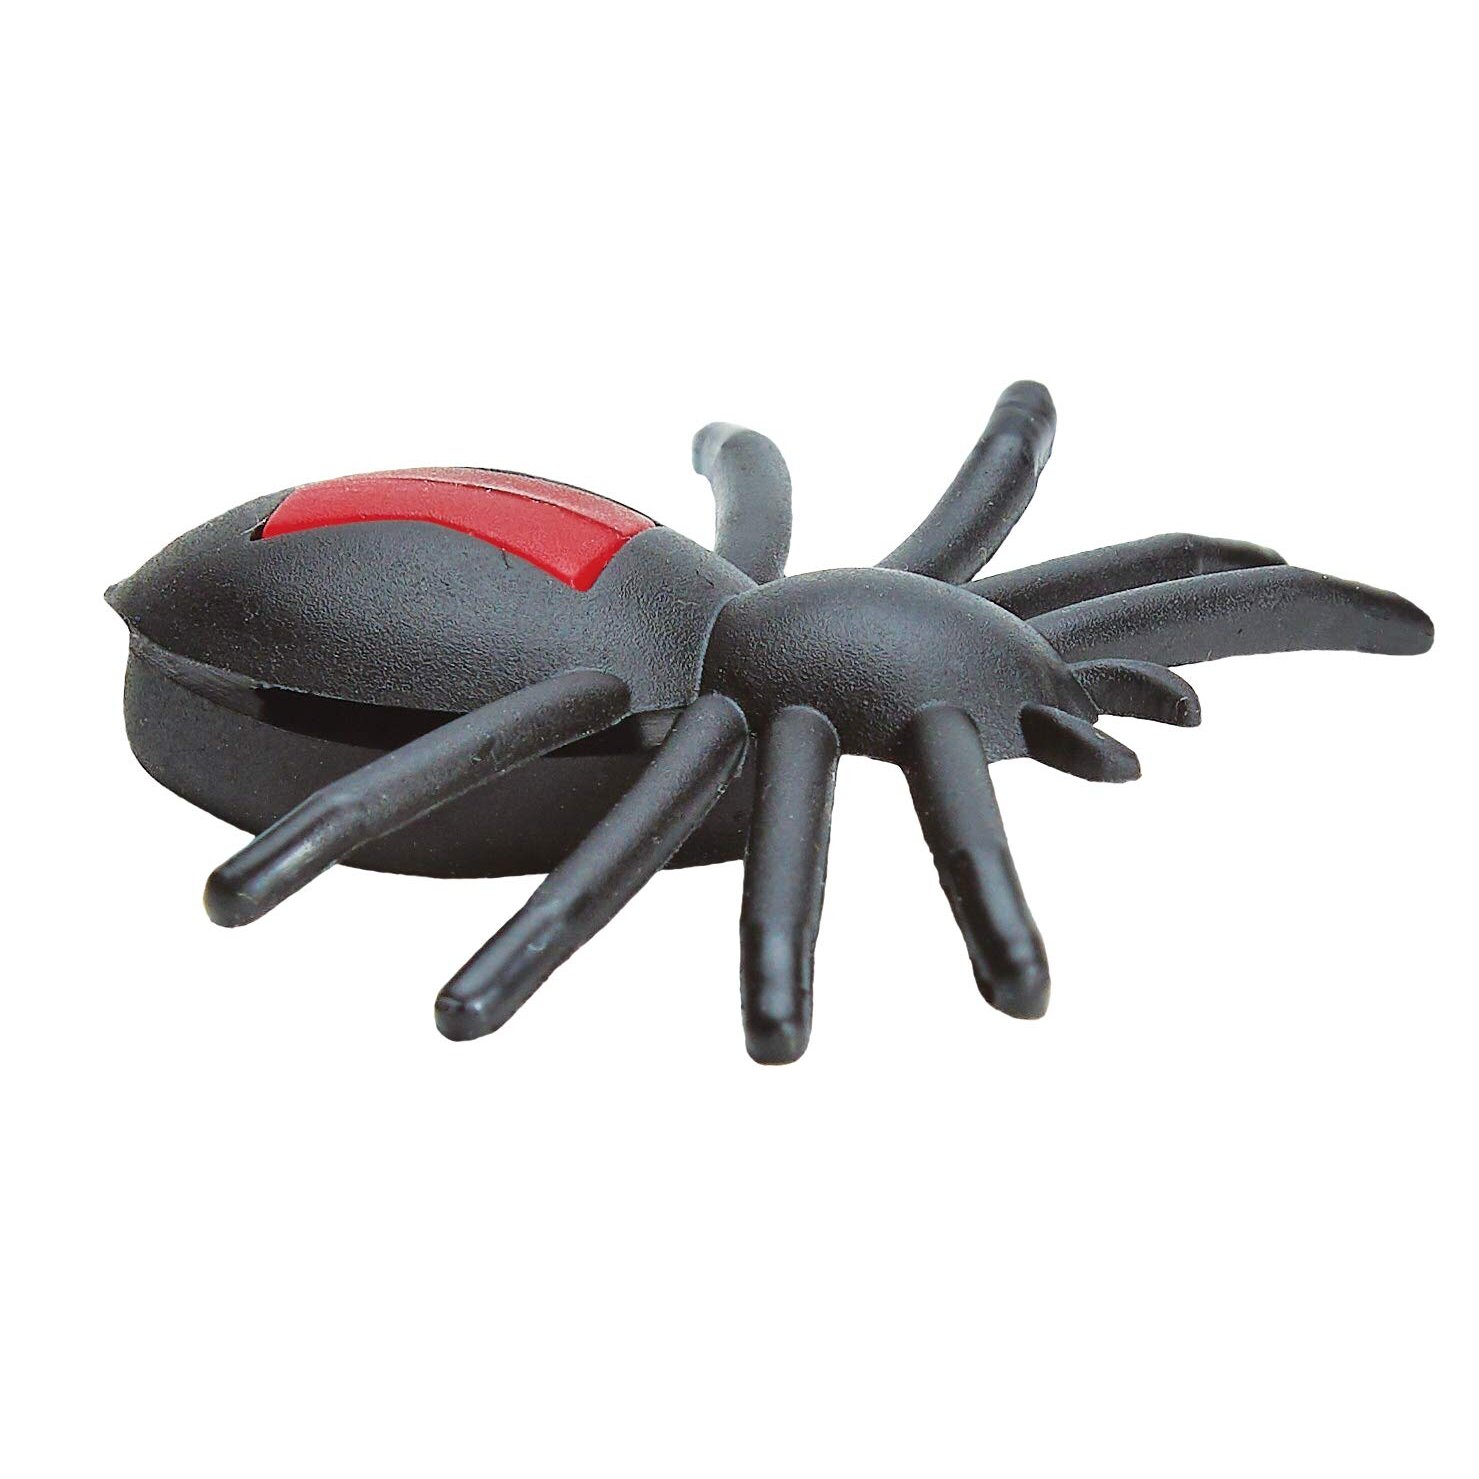 Tourna Spider Vibration Dampener